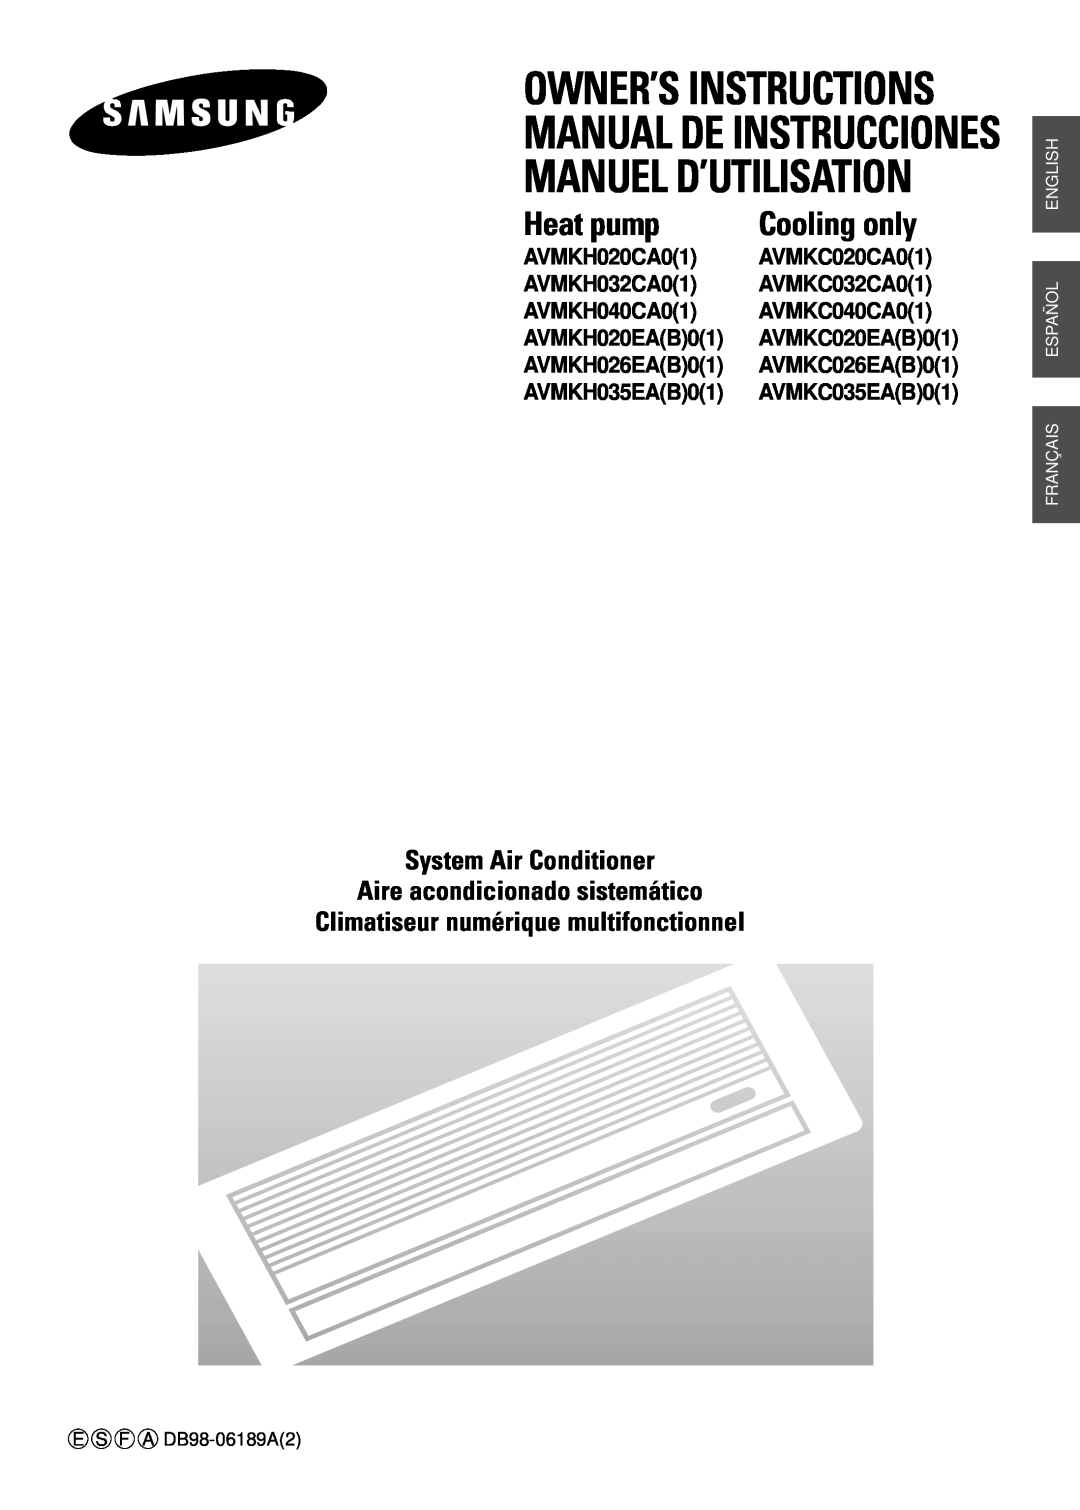 Samsung AVMKC040CA0 manuel dutilisation System Air Conditioner, Aire acondicionado sistemático, Owner’S Instructions 